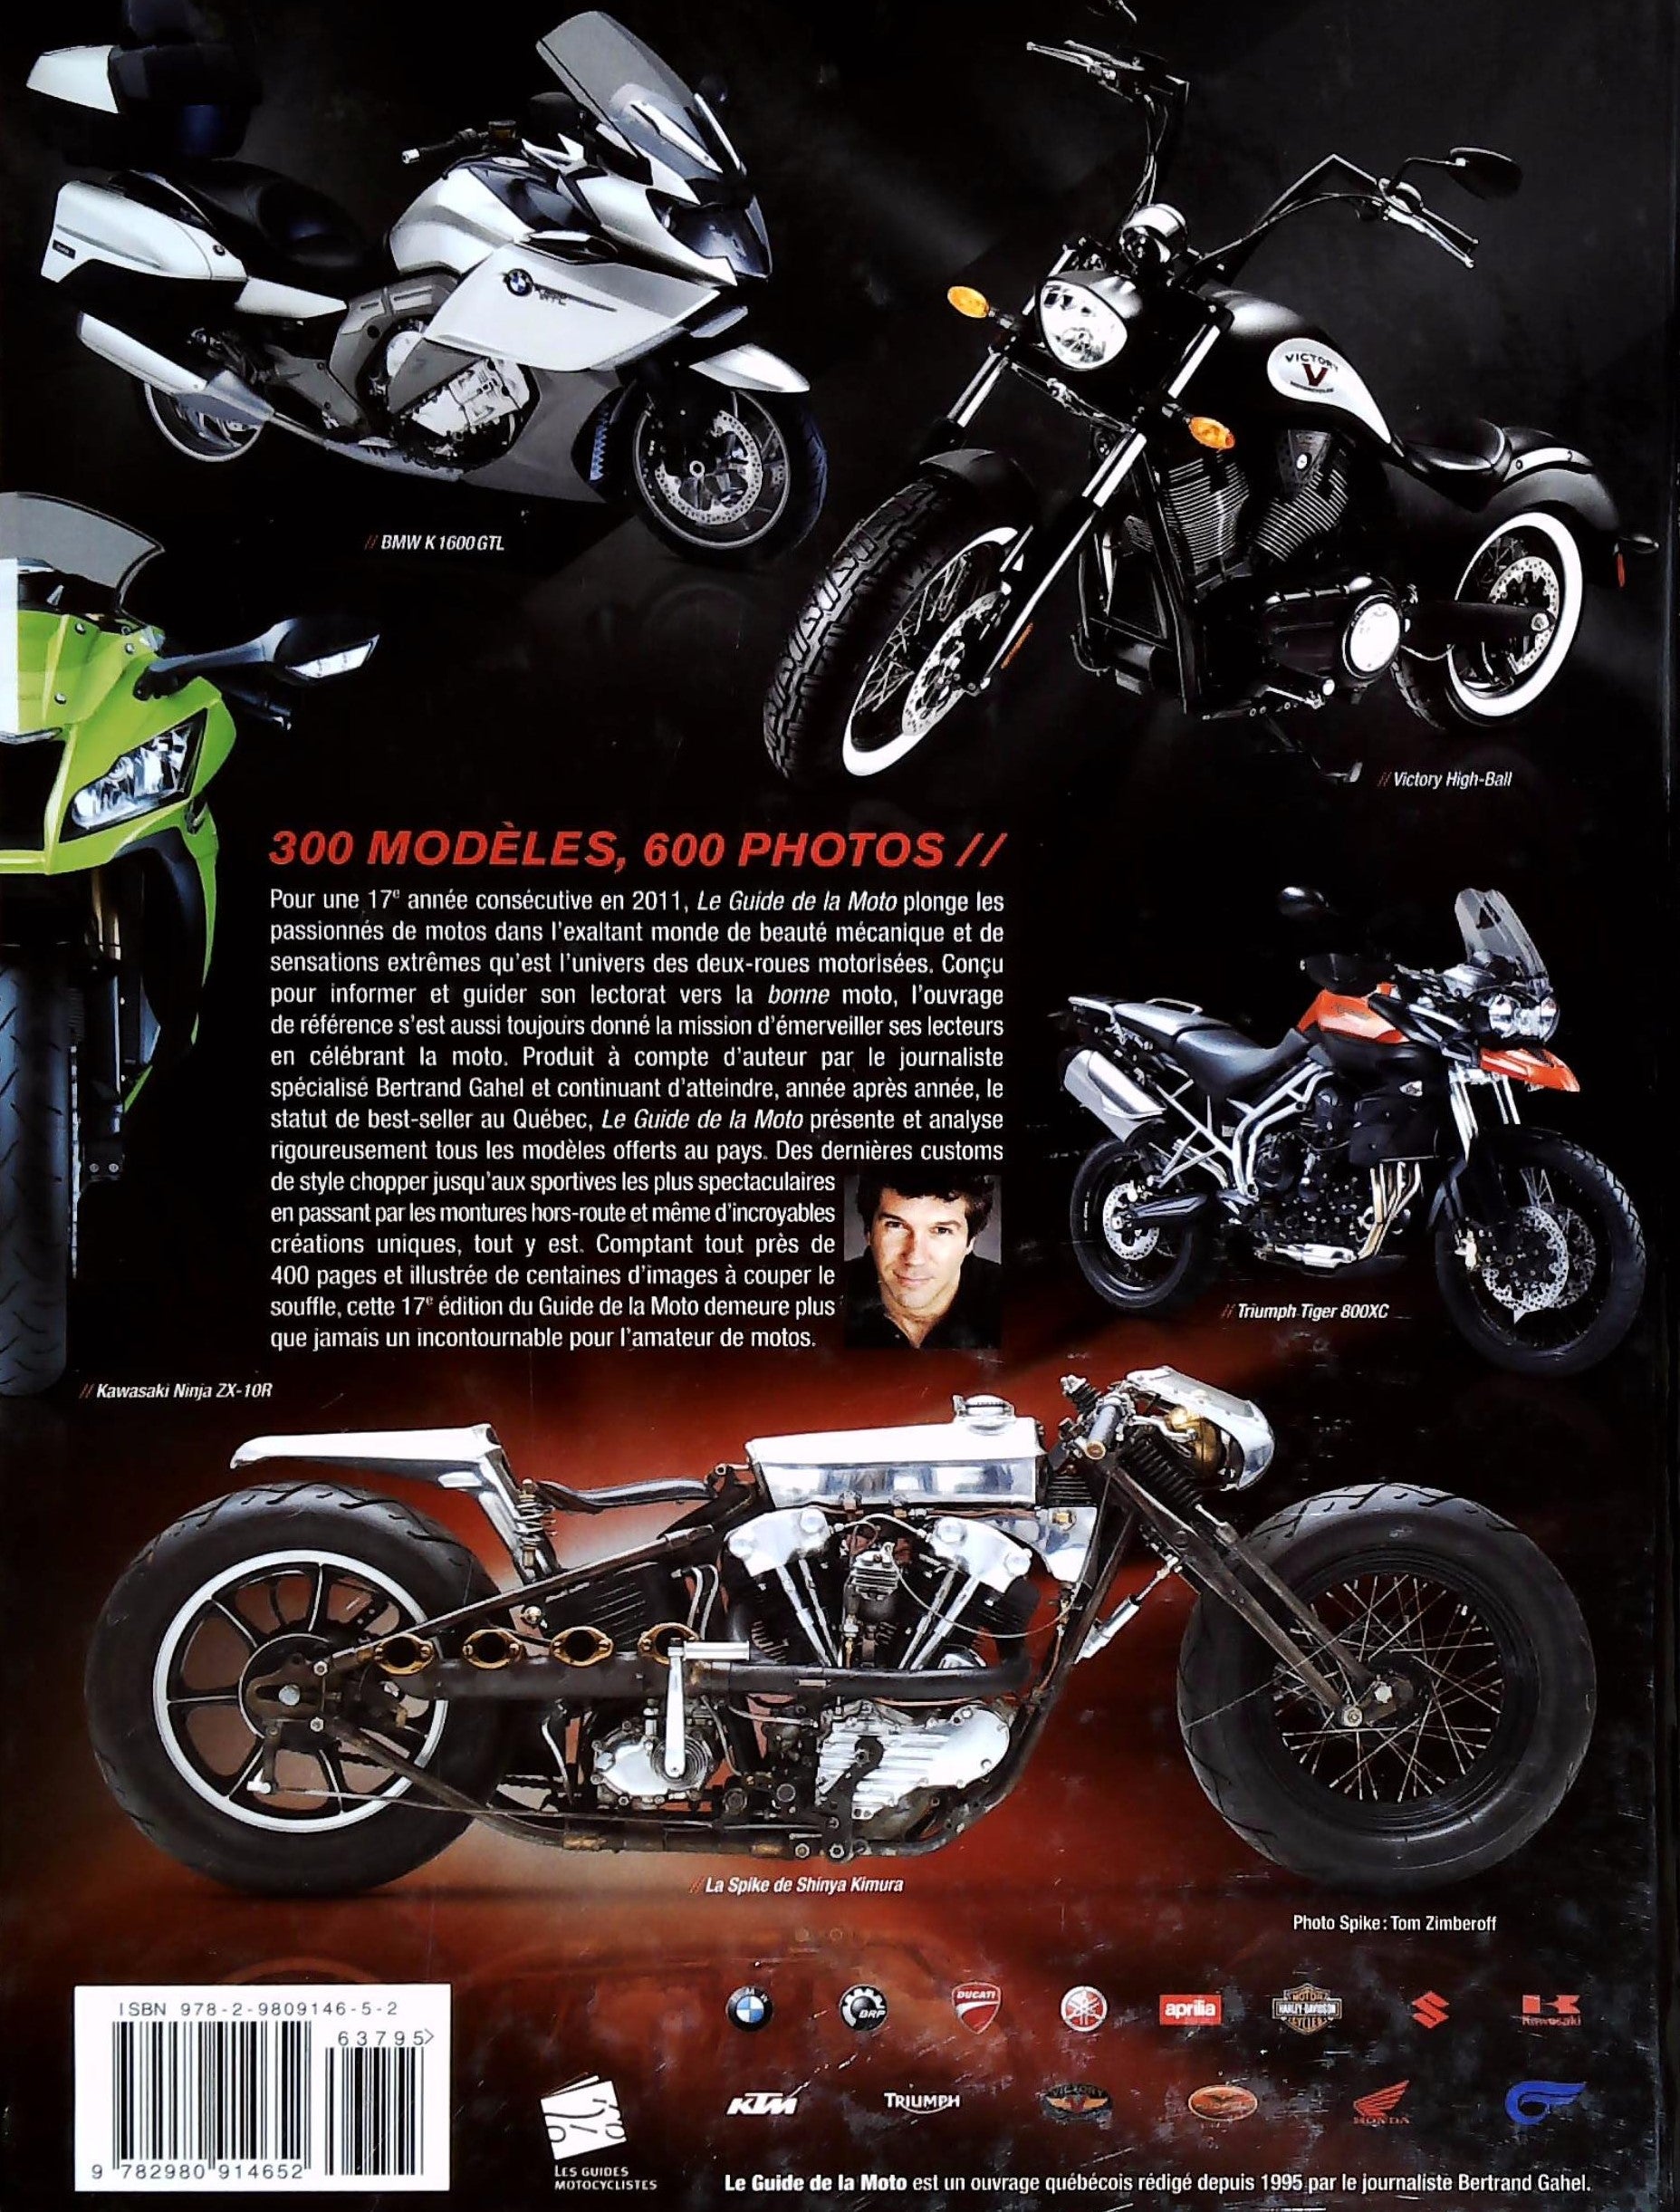 Le guide de la moto 2011 (Bertrand Gahel)